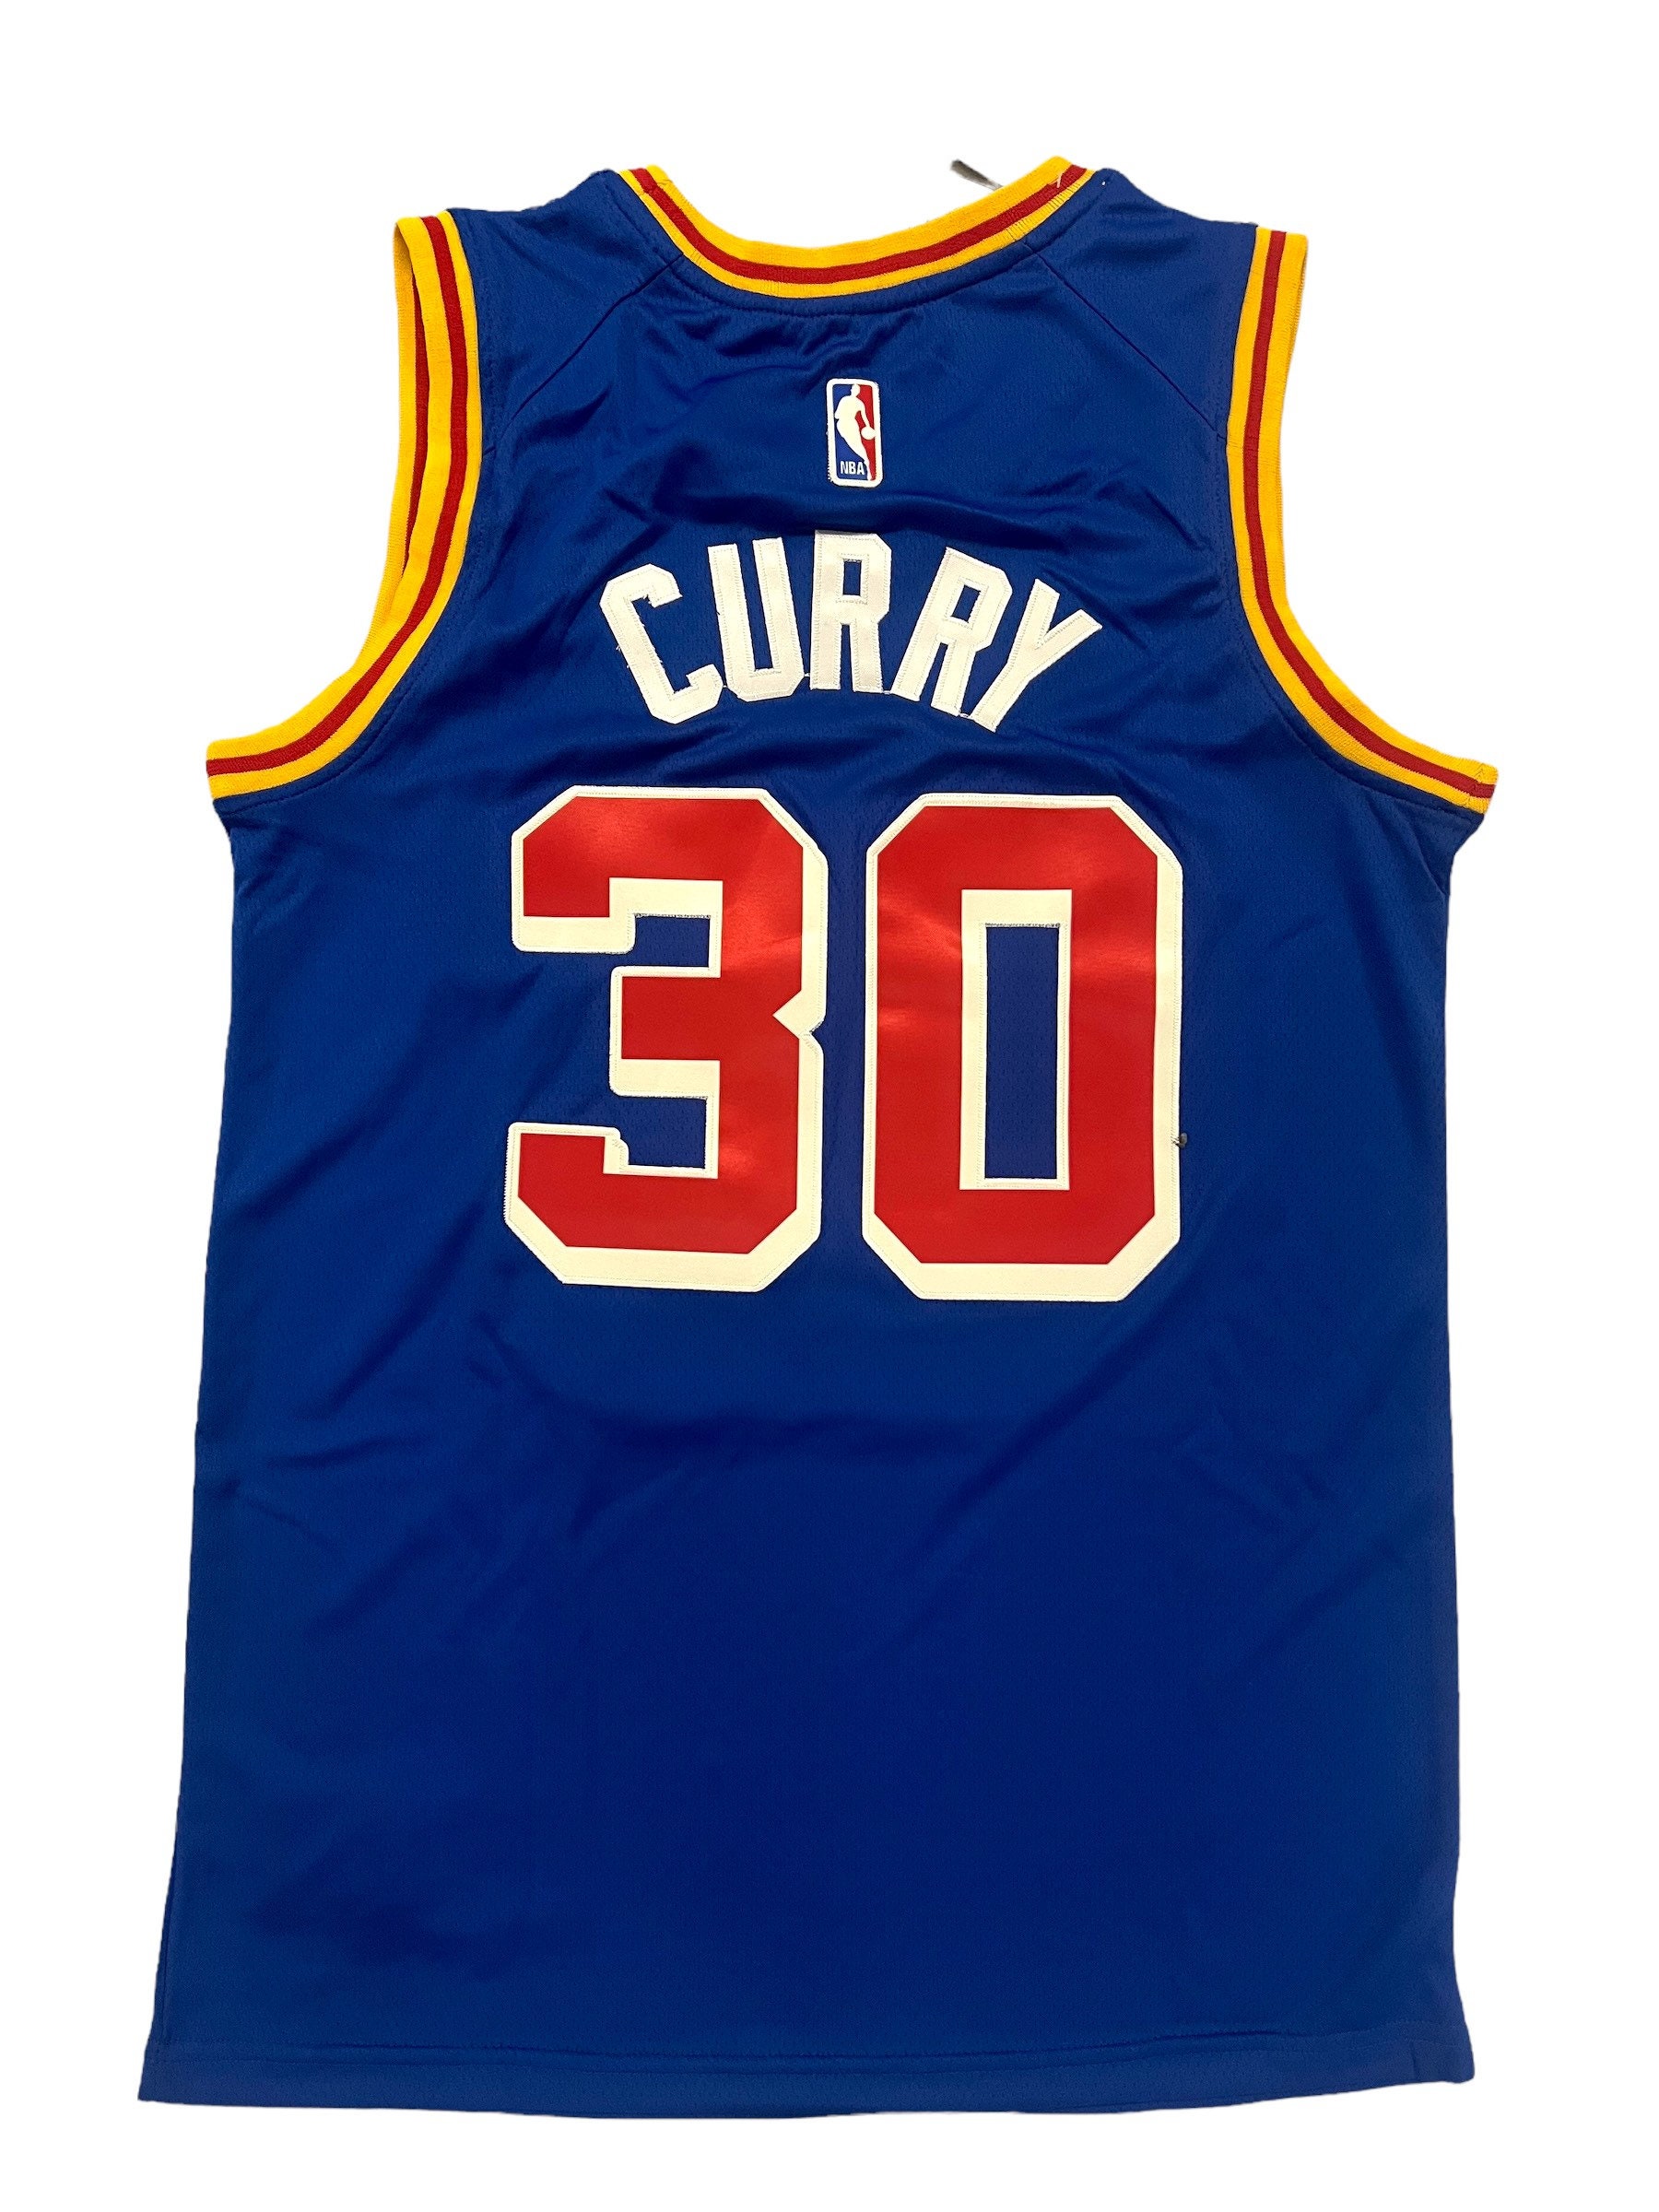 Steph Curry, Kobe Bryant jerseys highlight July auction at Goldin